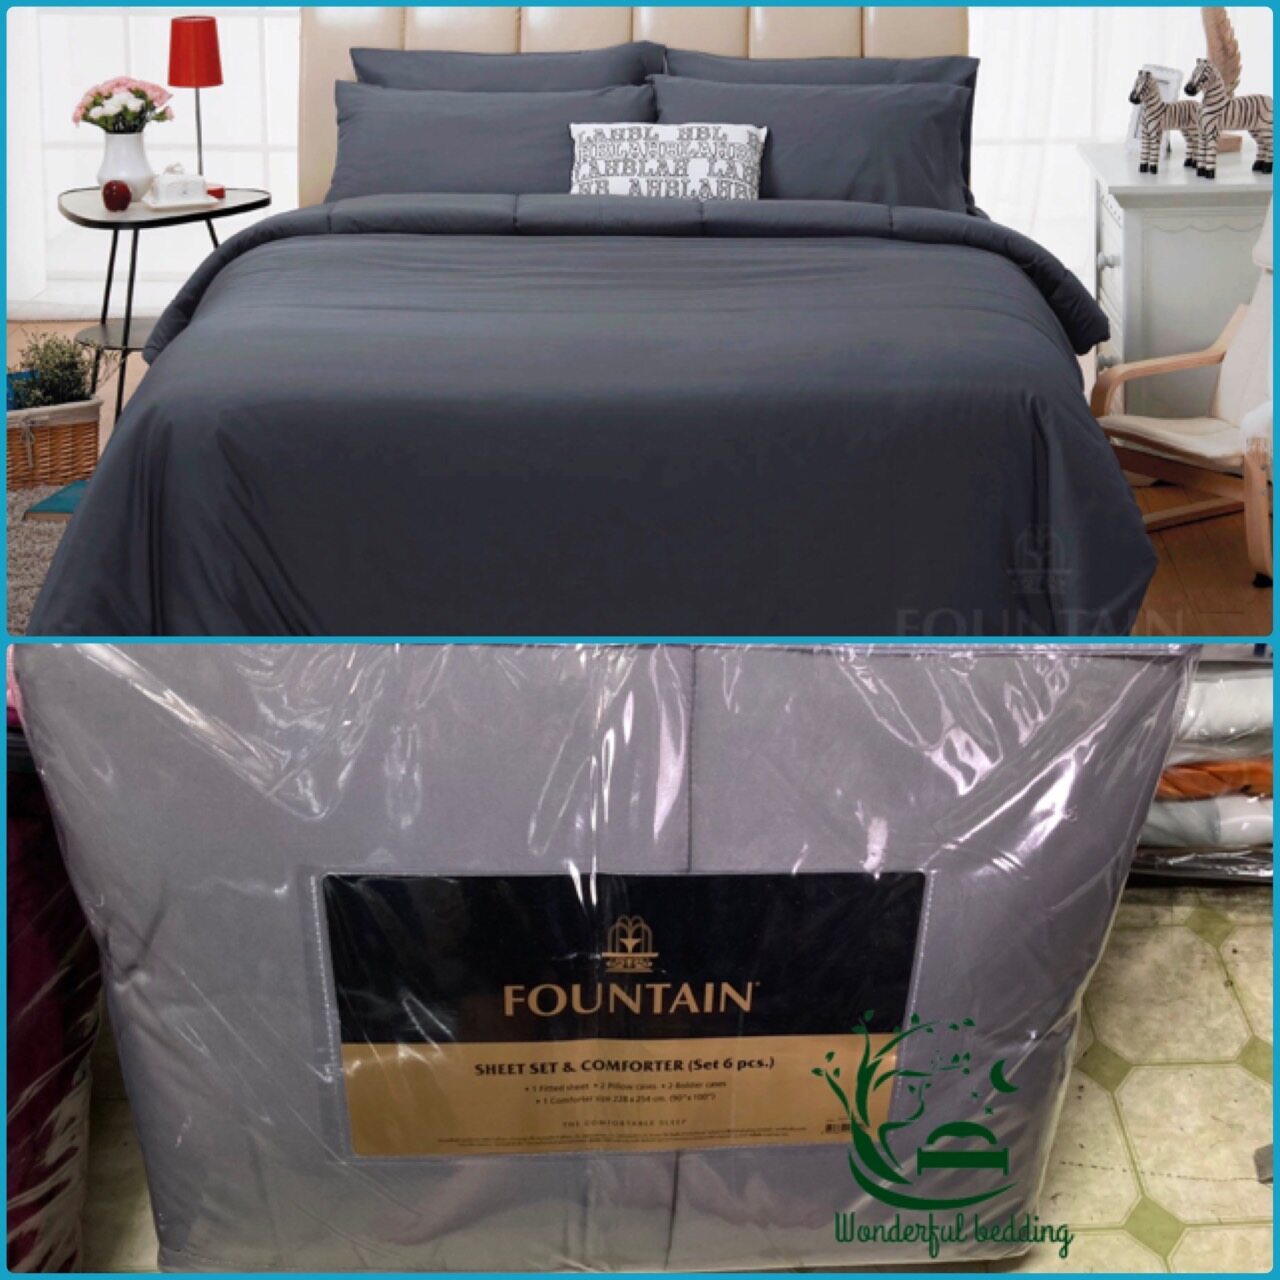 FOUNTAIN ชุดผ้าปู (ไม่มีผ้านวม) ผ้าปู ที่นอน แท้ 100% FTC สีพื้น เขียว Green Gray เทา ขนาด 3.5 5 6ฟุต ชุดเครื่องนอน ผ้านวม ผ้าปูที่นอน wonderful bedding  variation3 Grayขนาดสินค้า 5 ฟุต